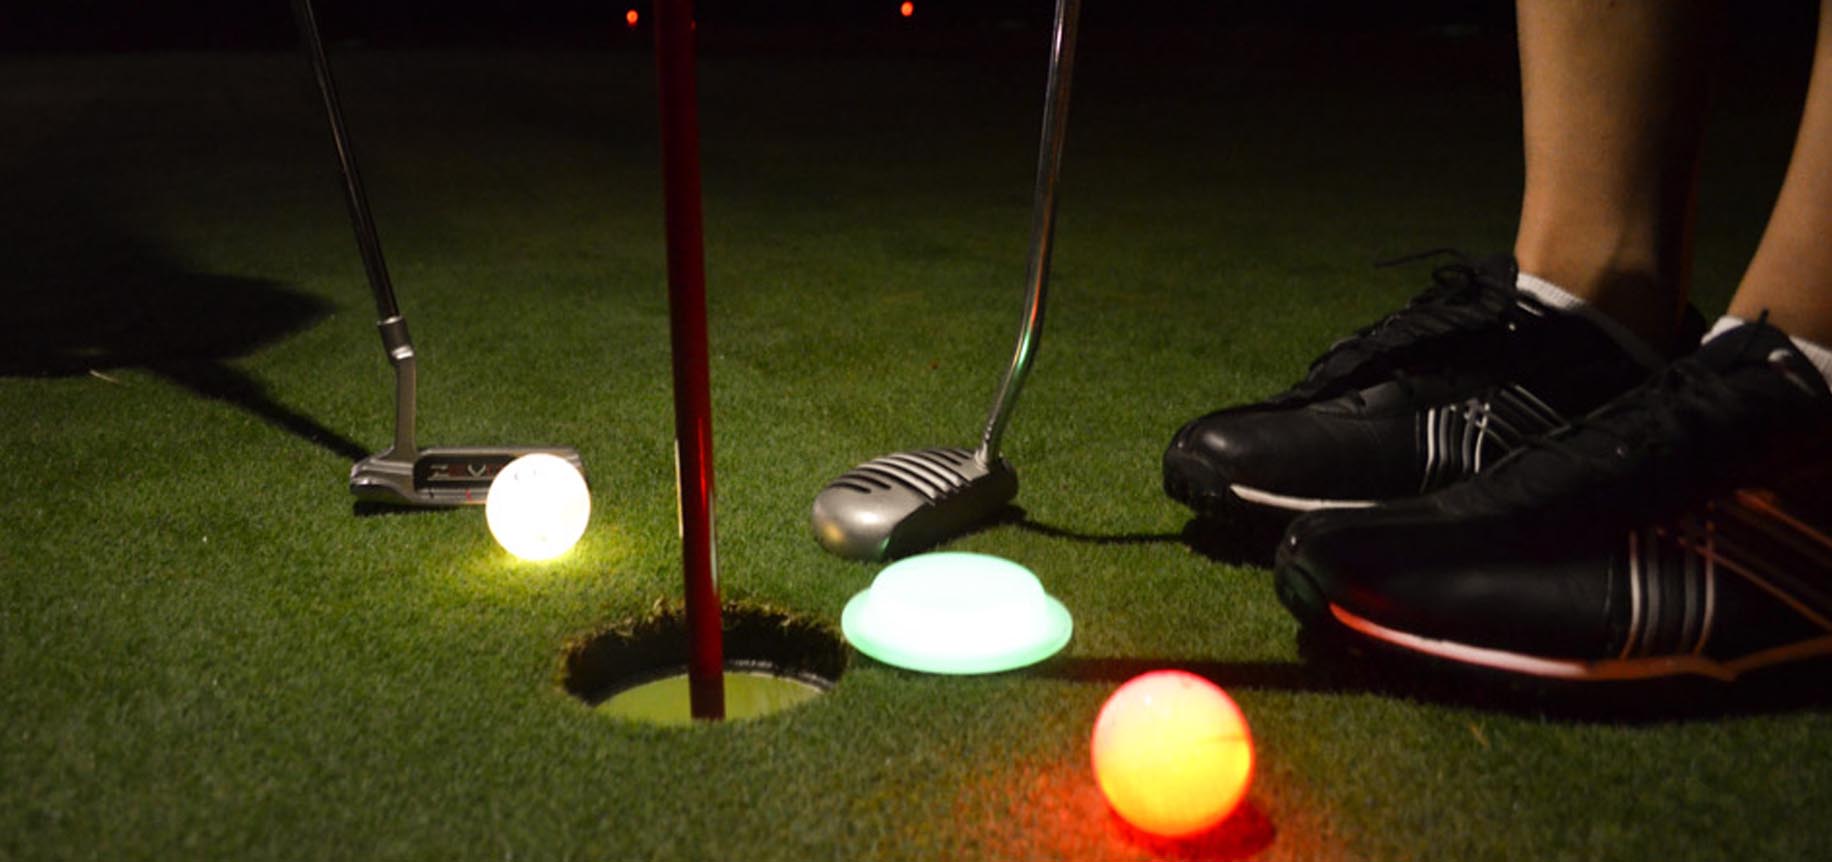 glow in the dark golf